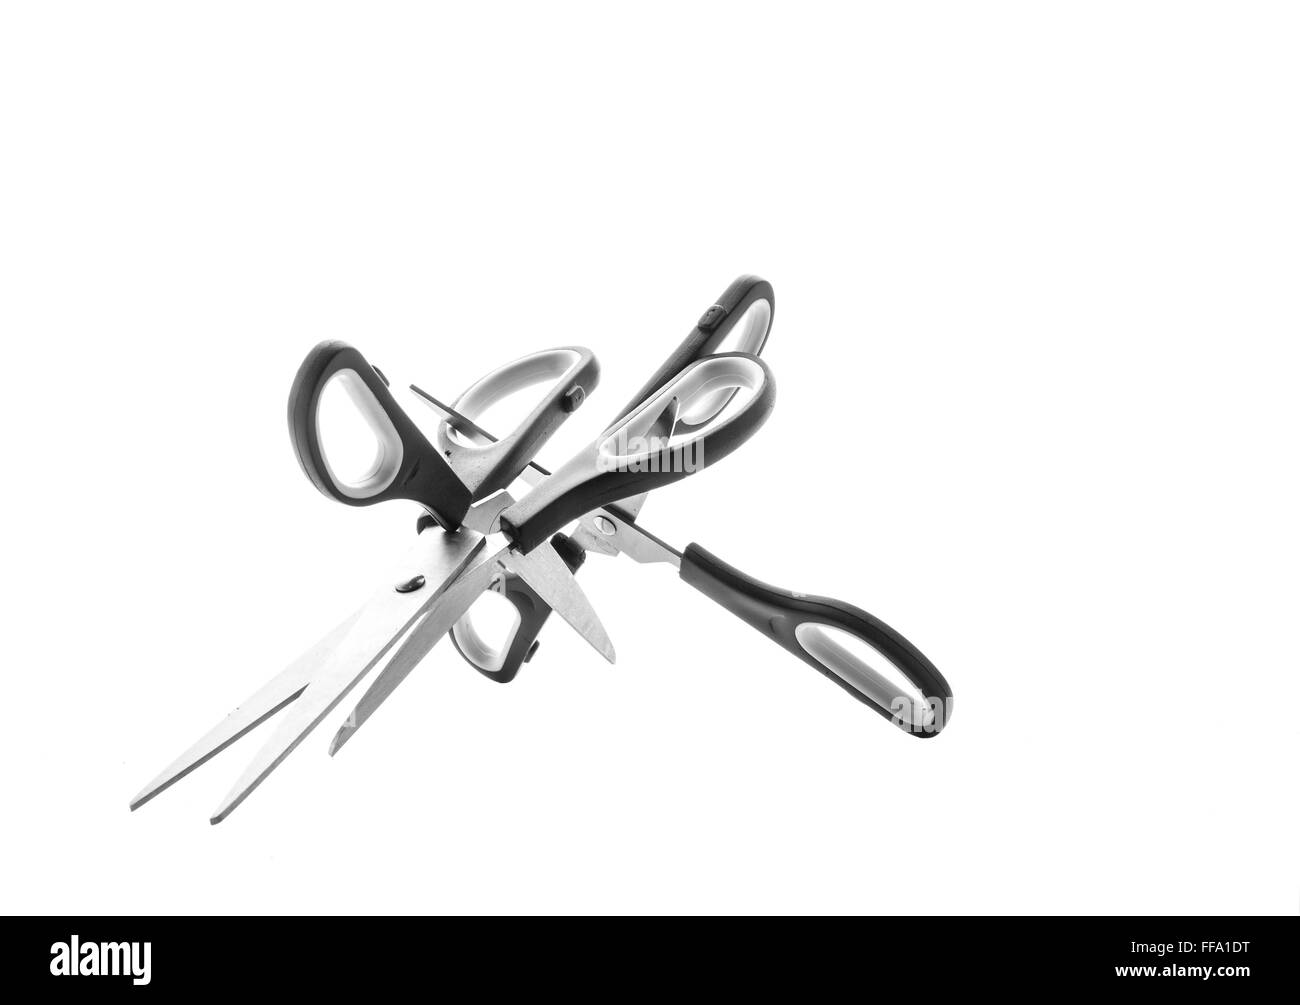 Pile of Scissors on white background Stock Photo